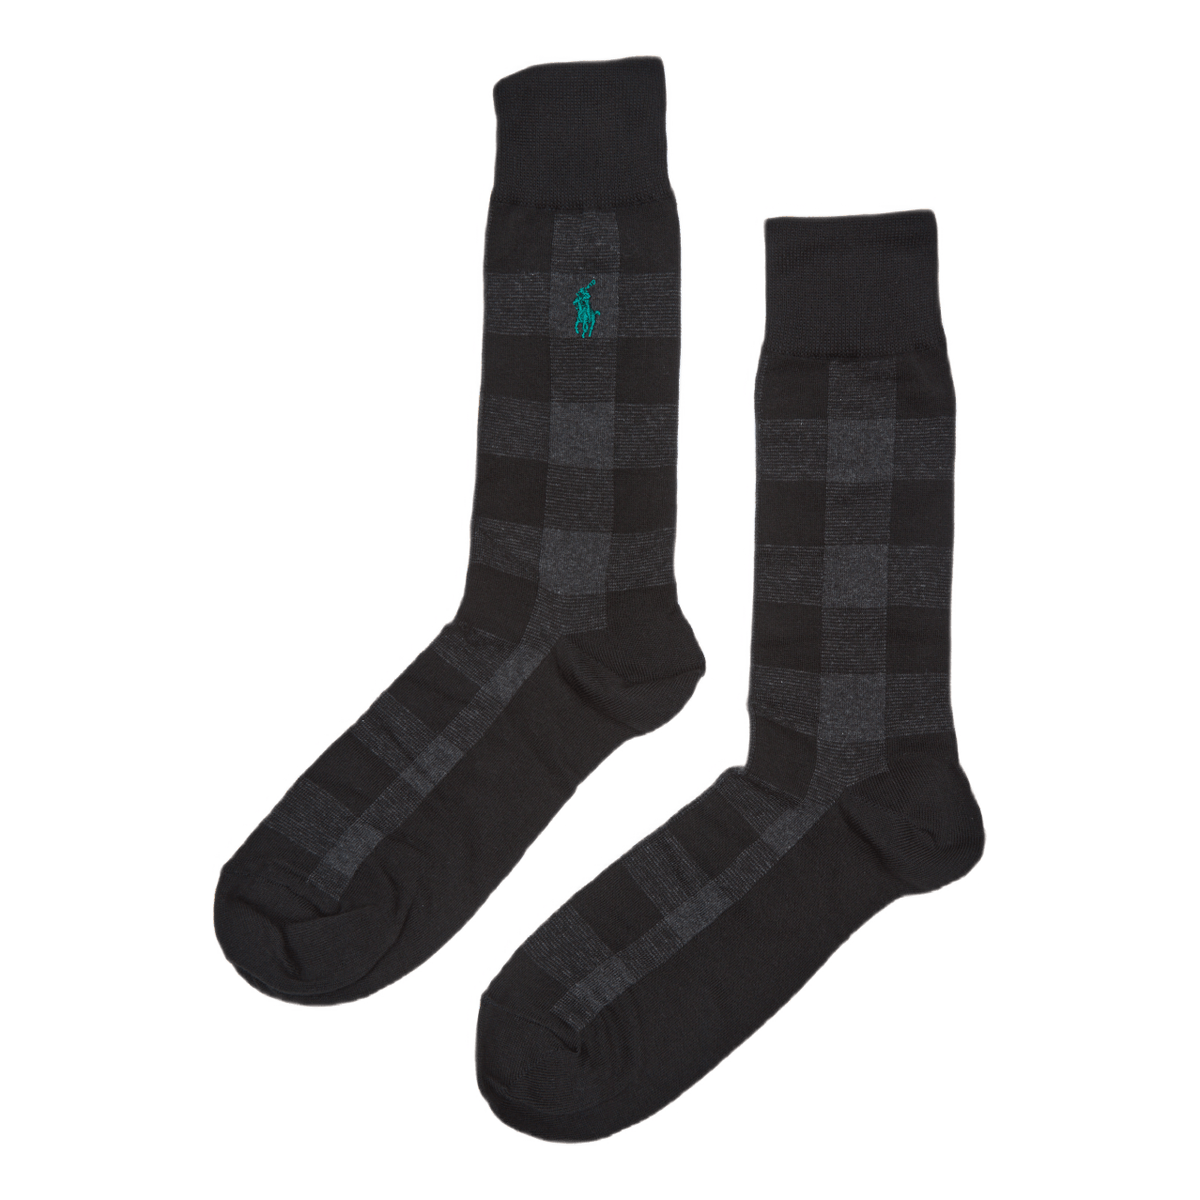 Buffalo Plaid Crew Sock Gift Set Rd/Grn/Gry